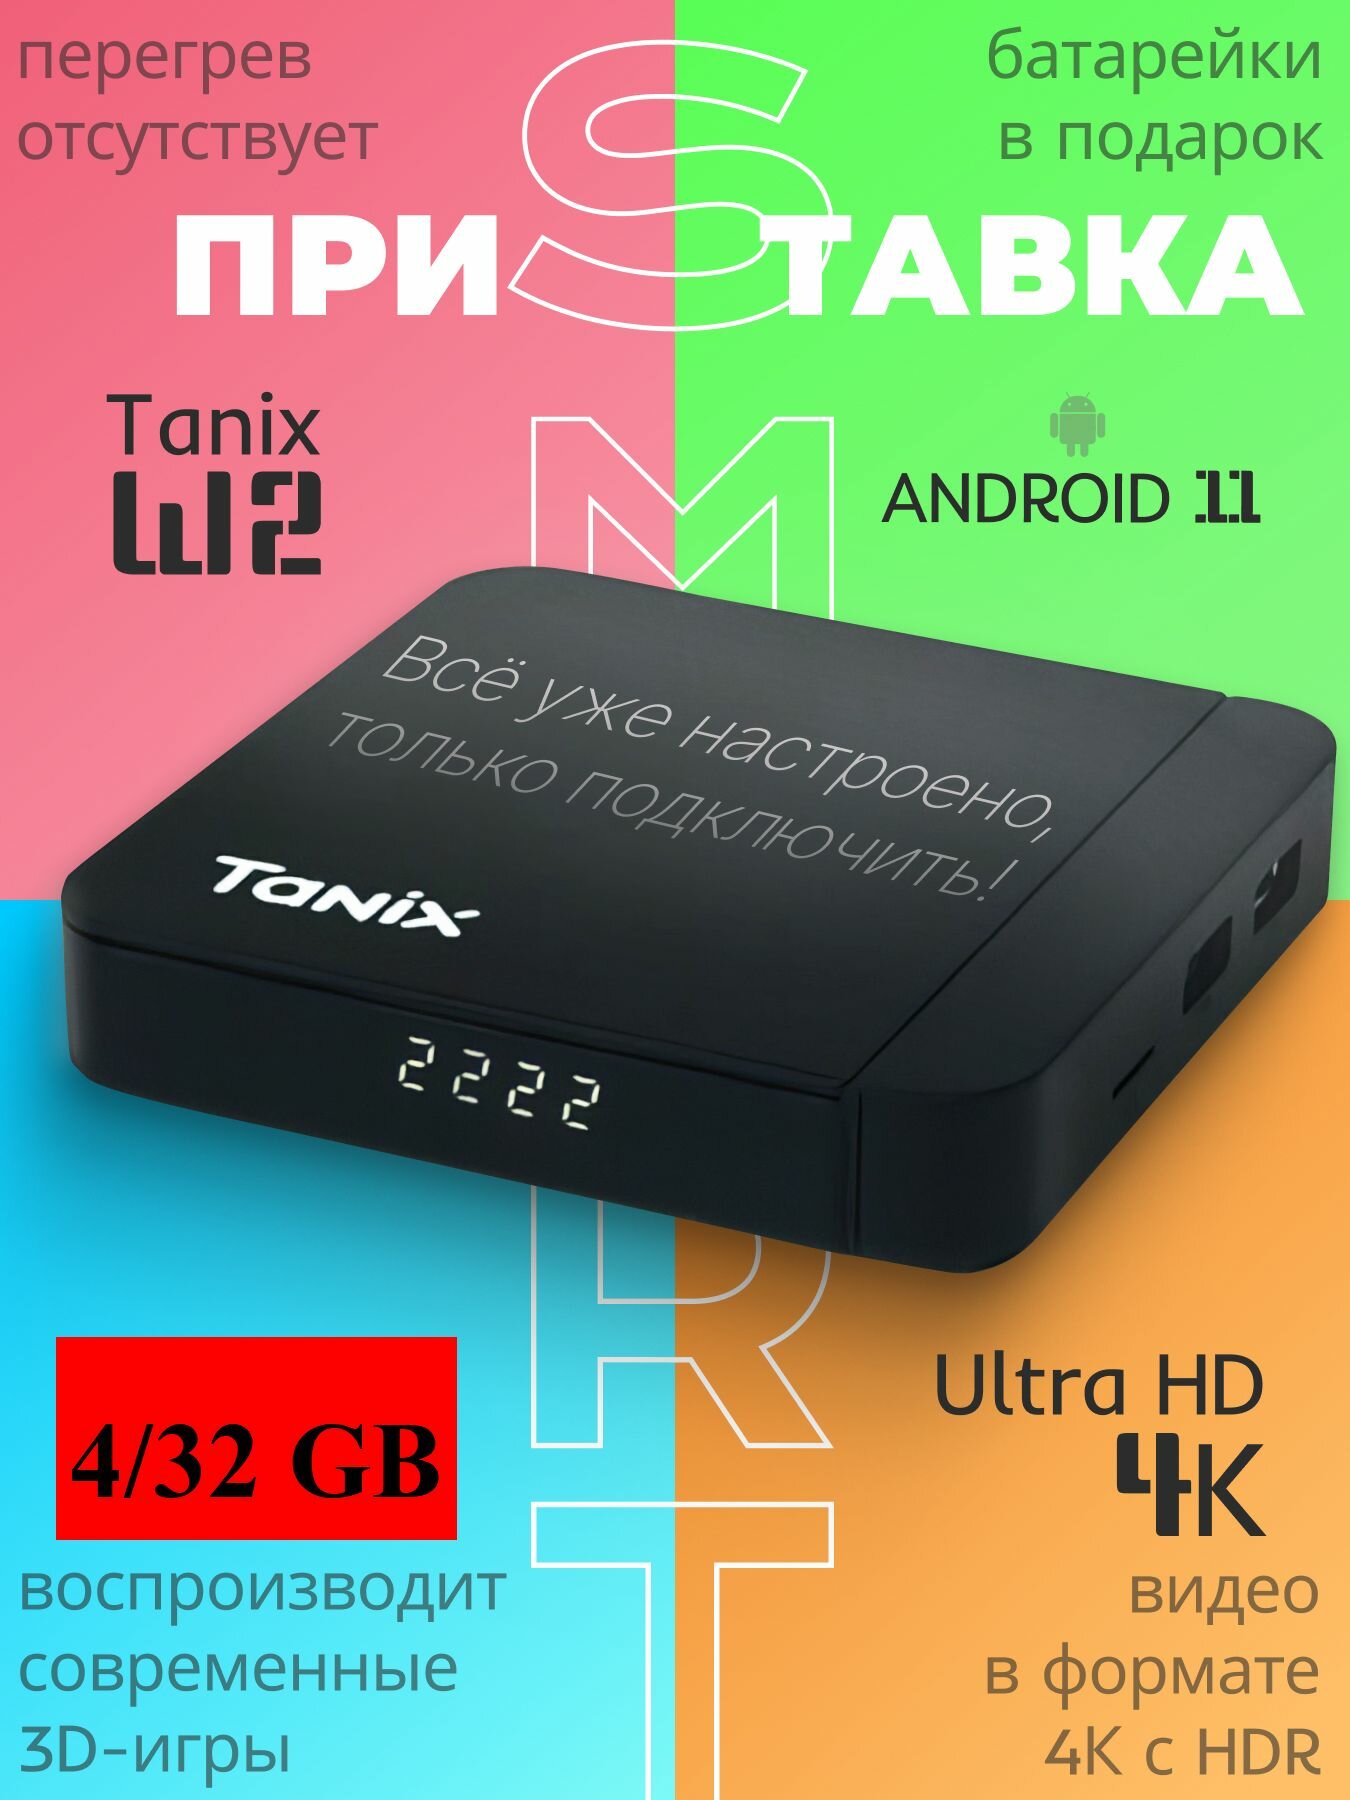 Смарт приставка Tanix W2 4/32Gb, Android TV 11, Прошивка slimBOXtv c установленными приложениями